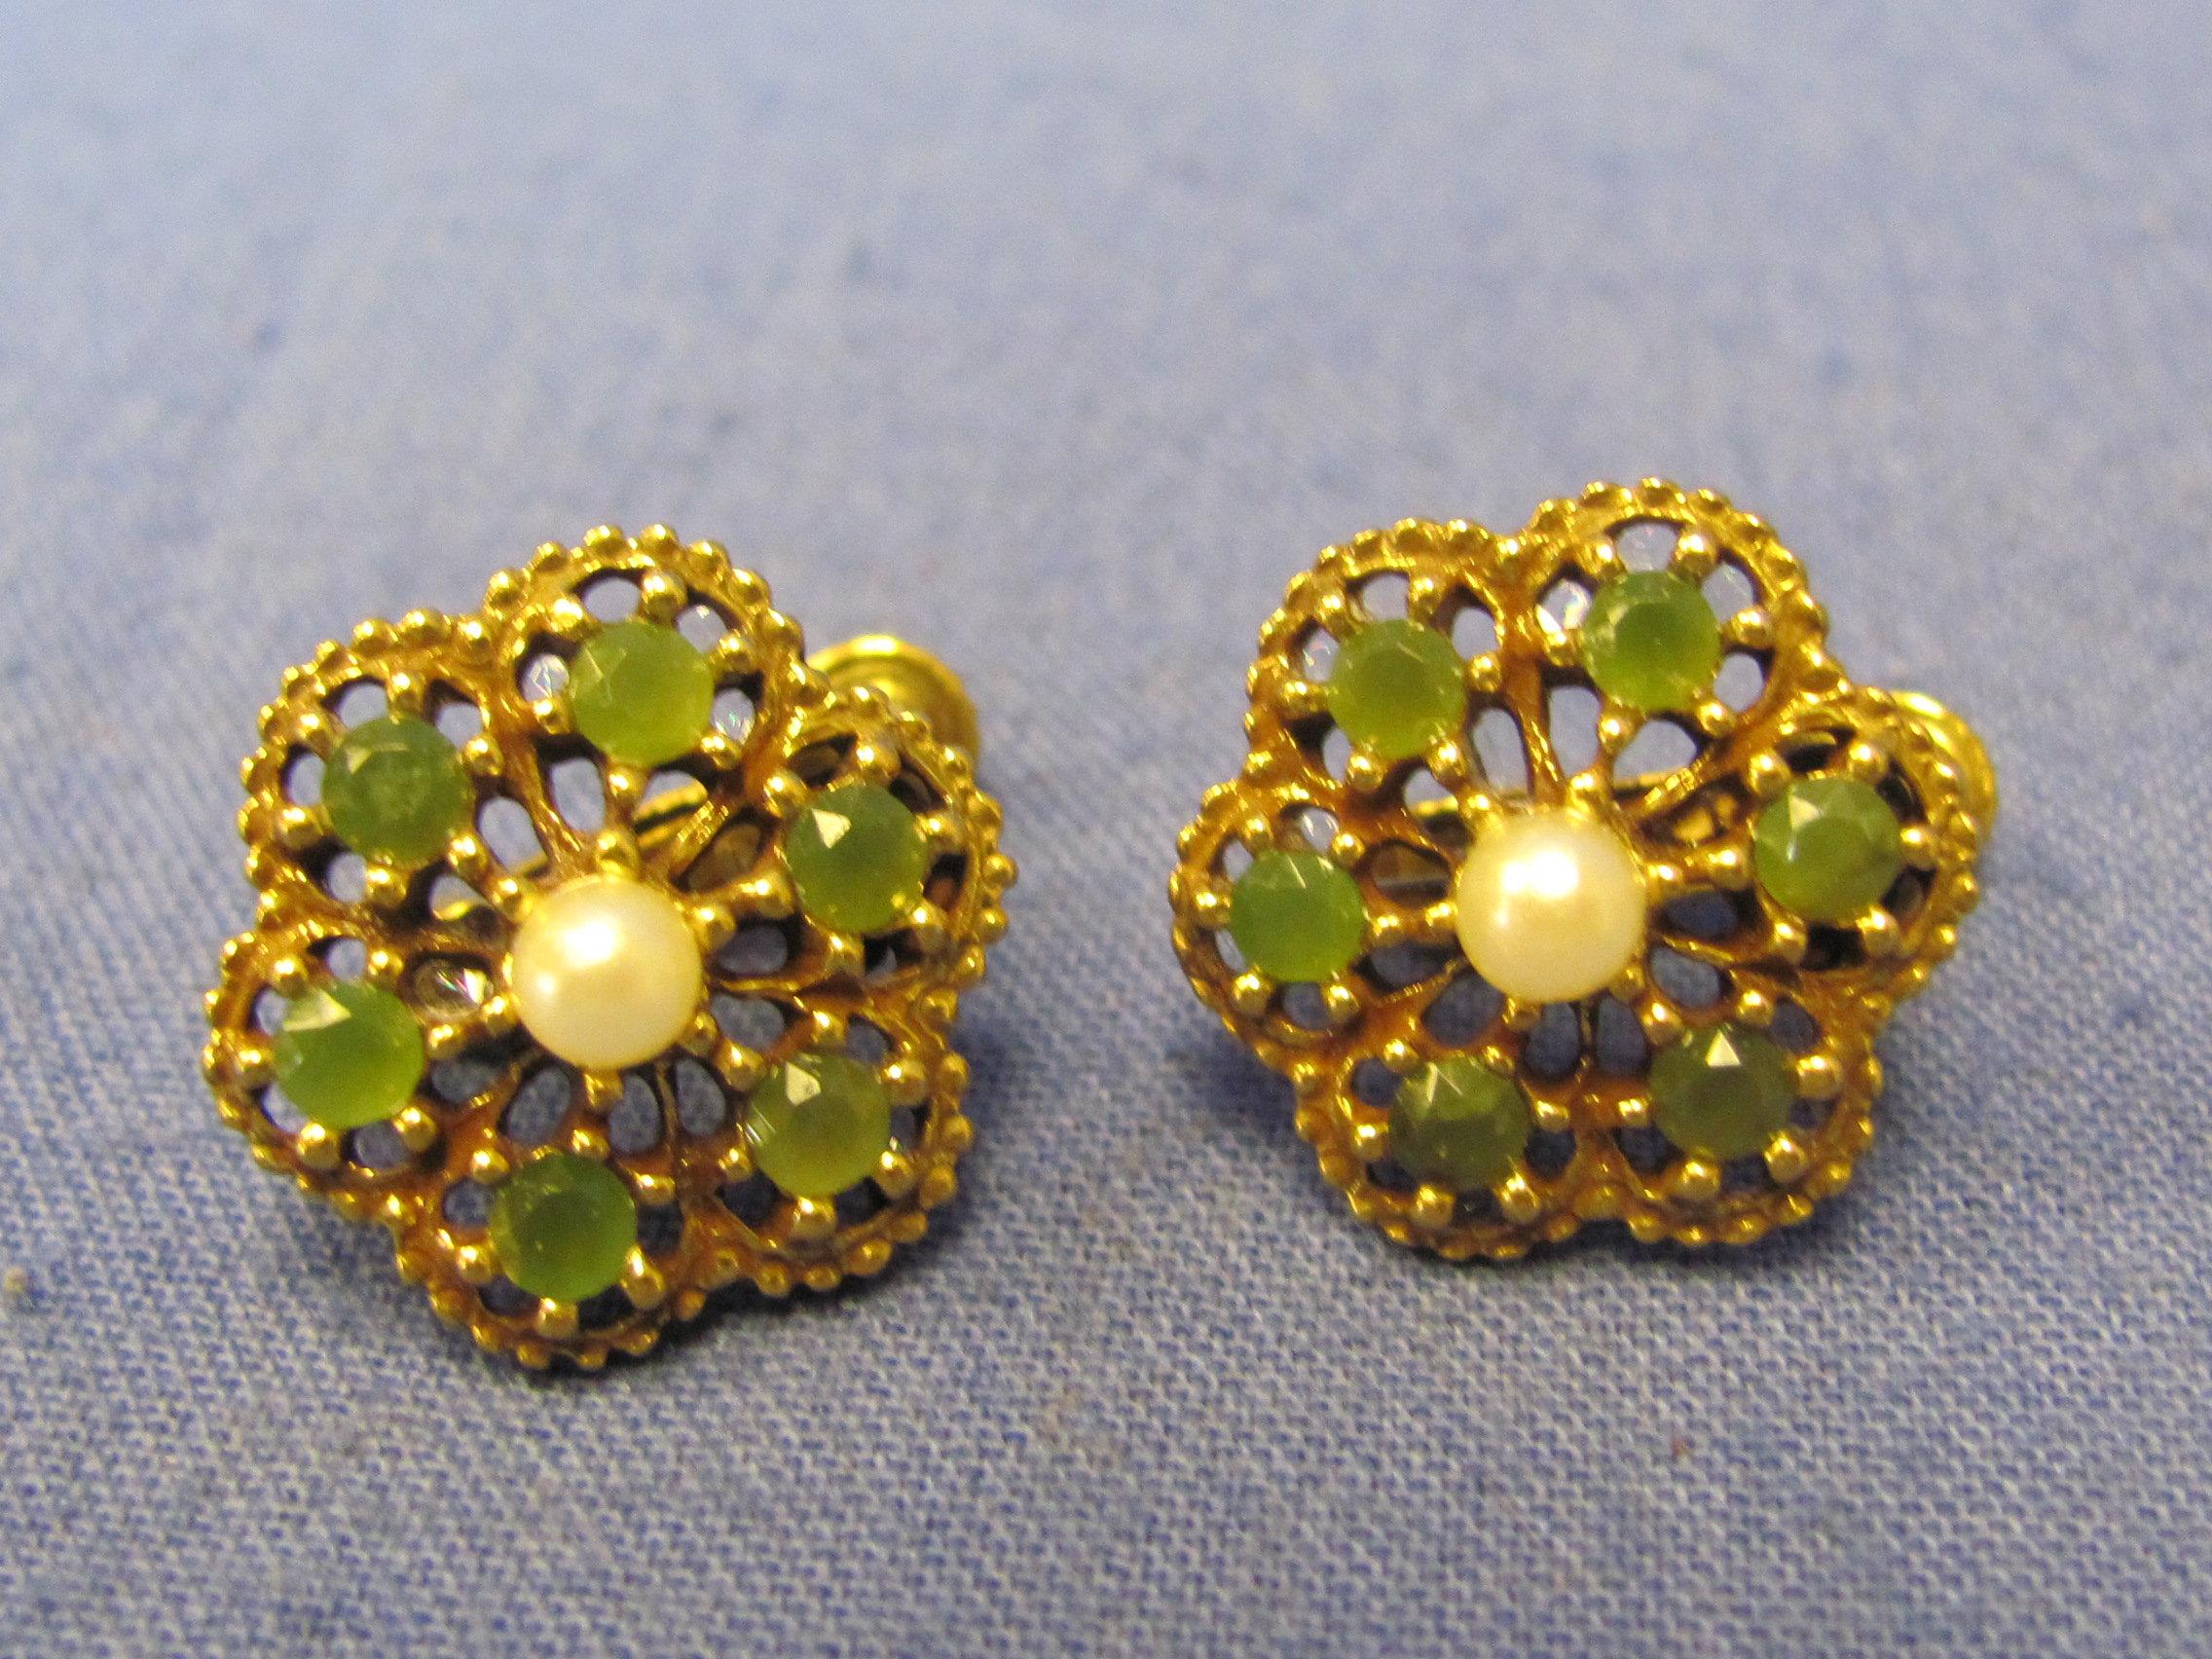 Vintage Set: Green Rhinestones & Faux Pearls – Bracelet – Pin & Screw-on Earrings